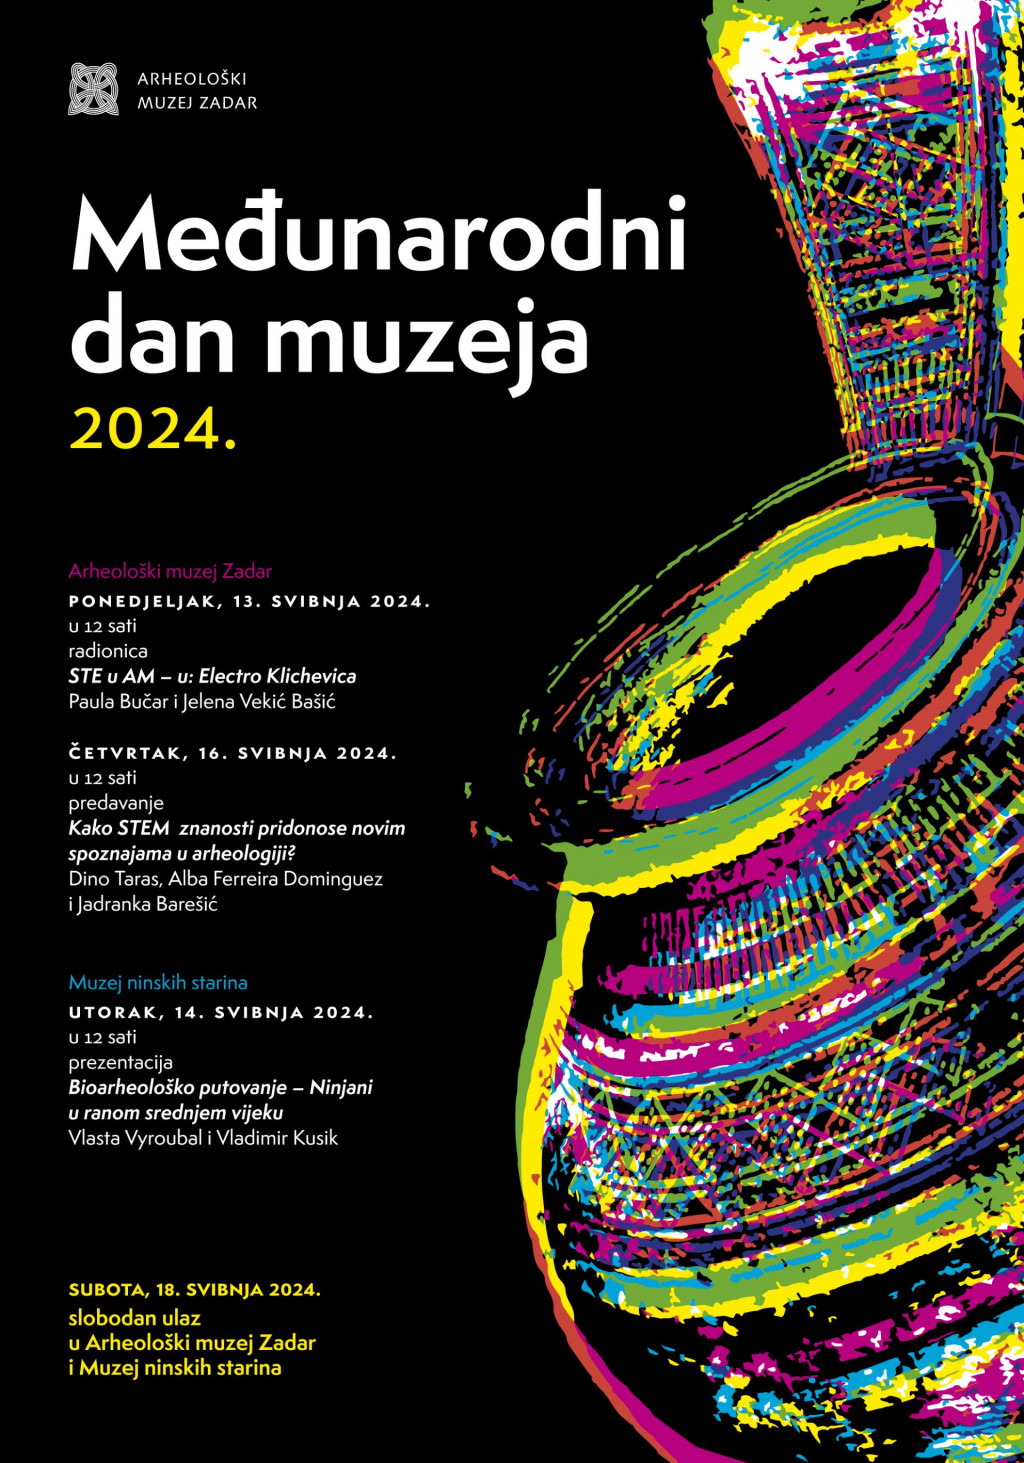 &lt;p&gt;ProgramProgram Arheološkoga muzeja Zadar u povodu obilježavanja Međunarodnog dana muzeja 2024. u povodu obilježavanja Međunarodnog dana muzeja 2024.&lt;/p&gt;